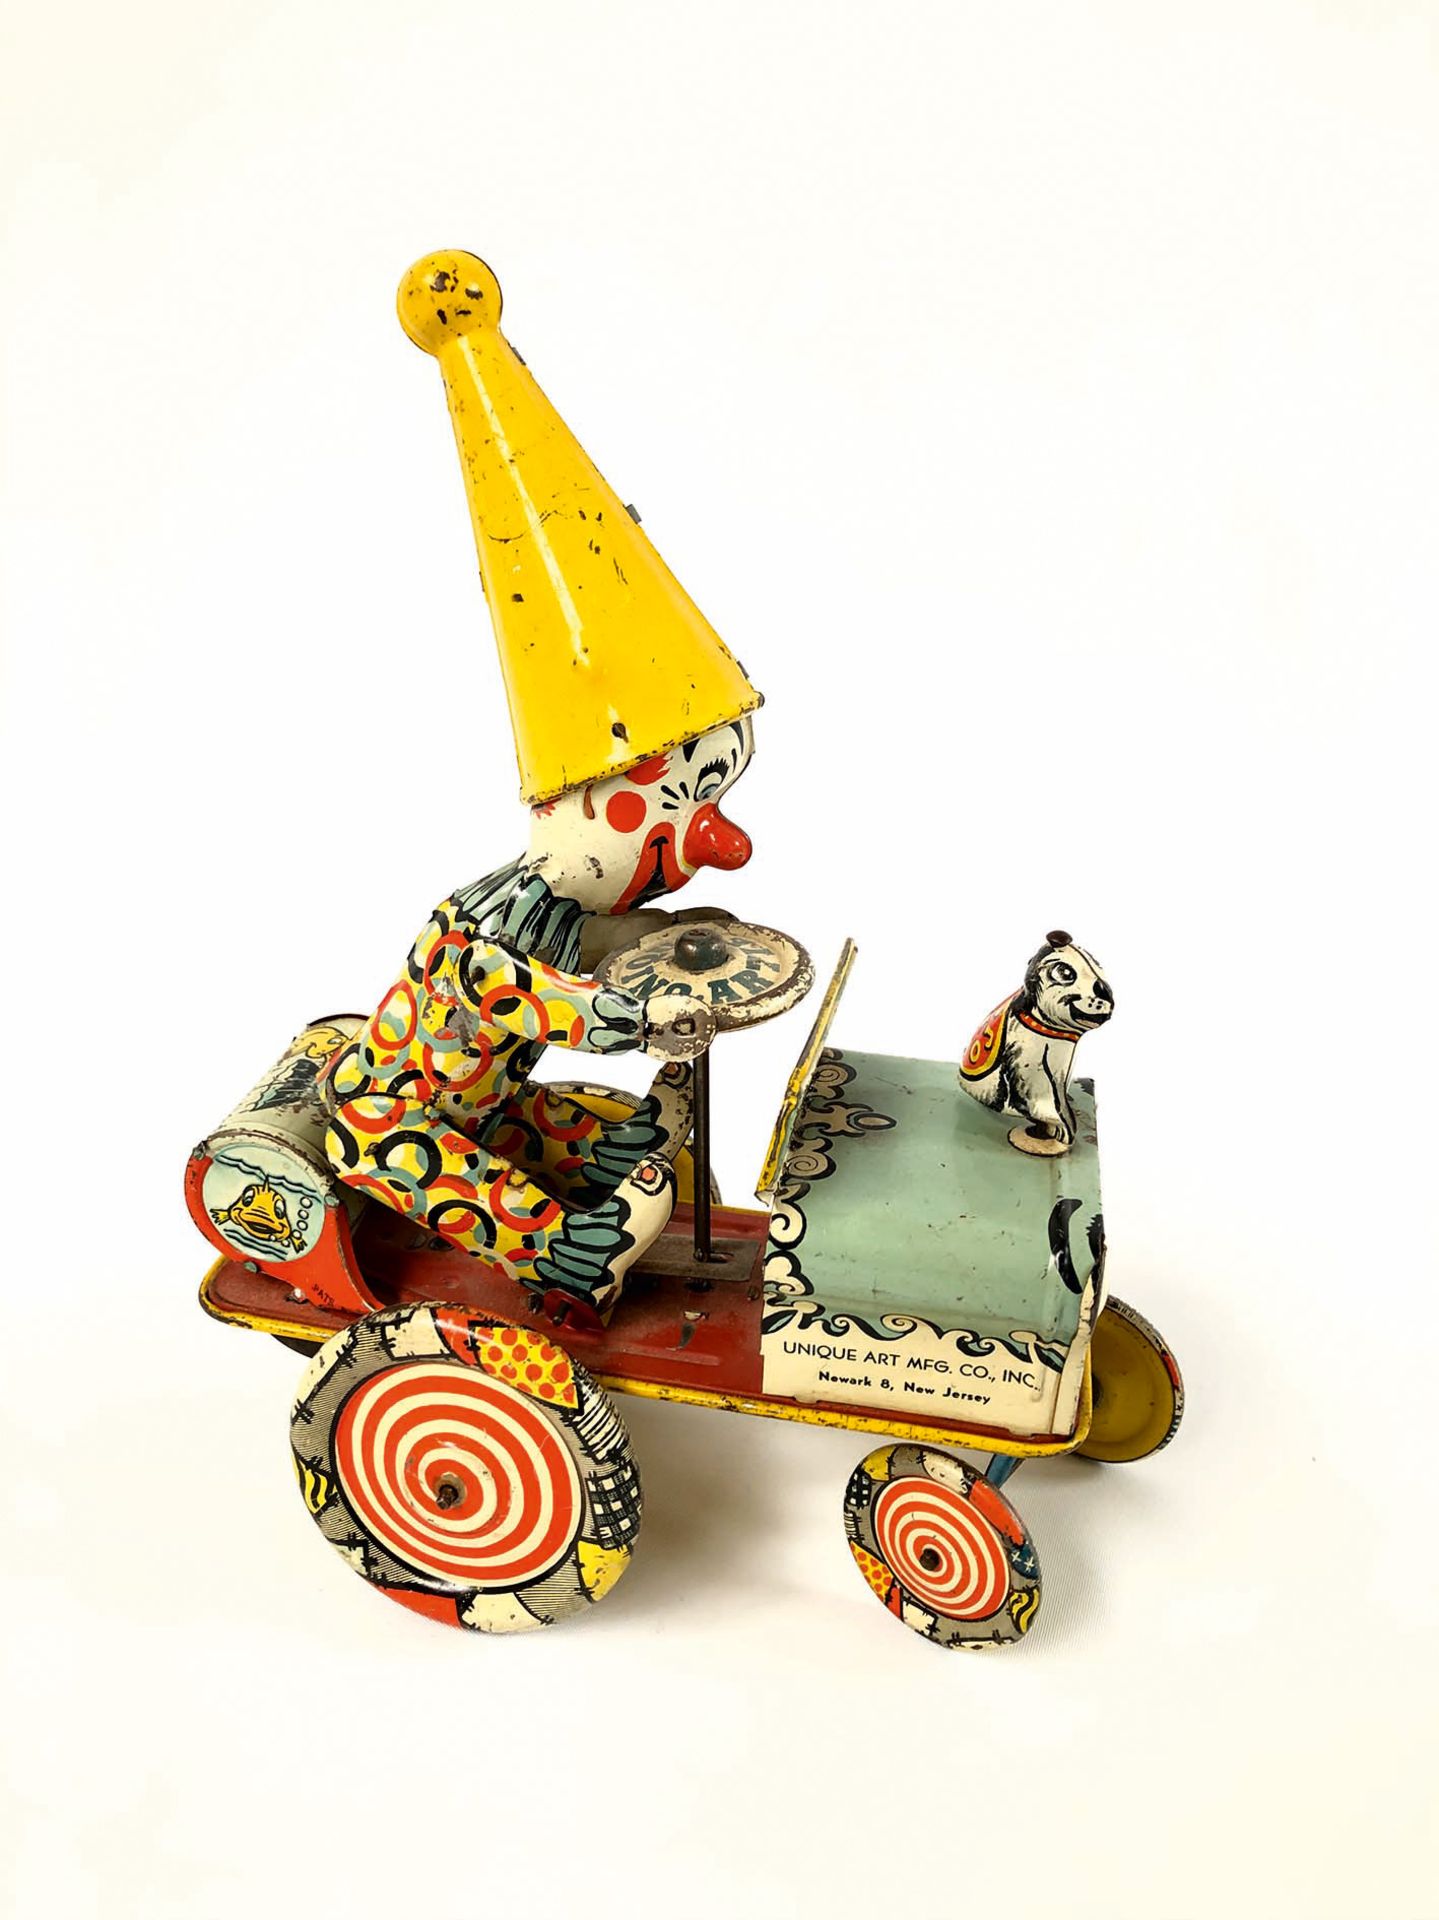 Unique Art Mfg. Co. Tin Clown Cart Toy ca. 1950 - Image 3 of 3